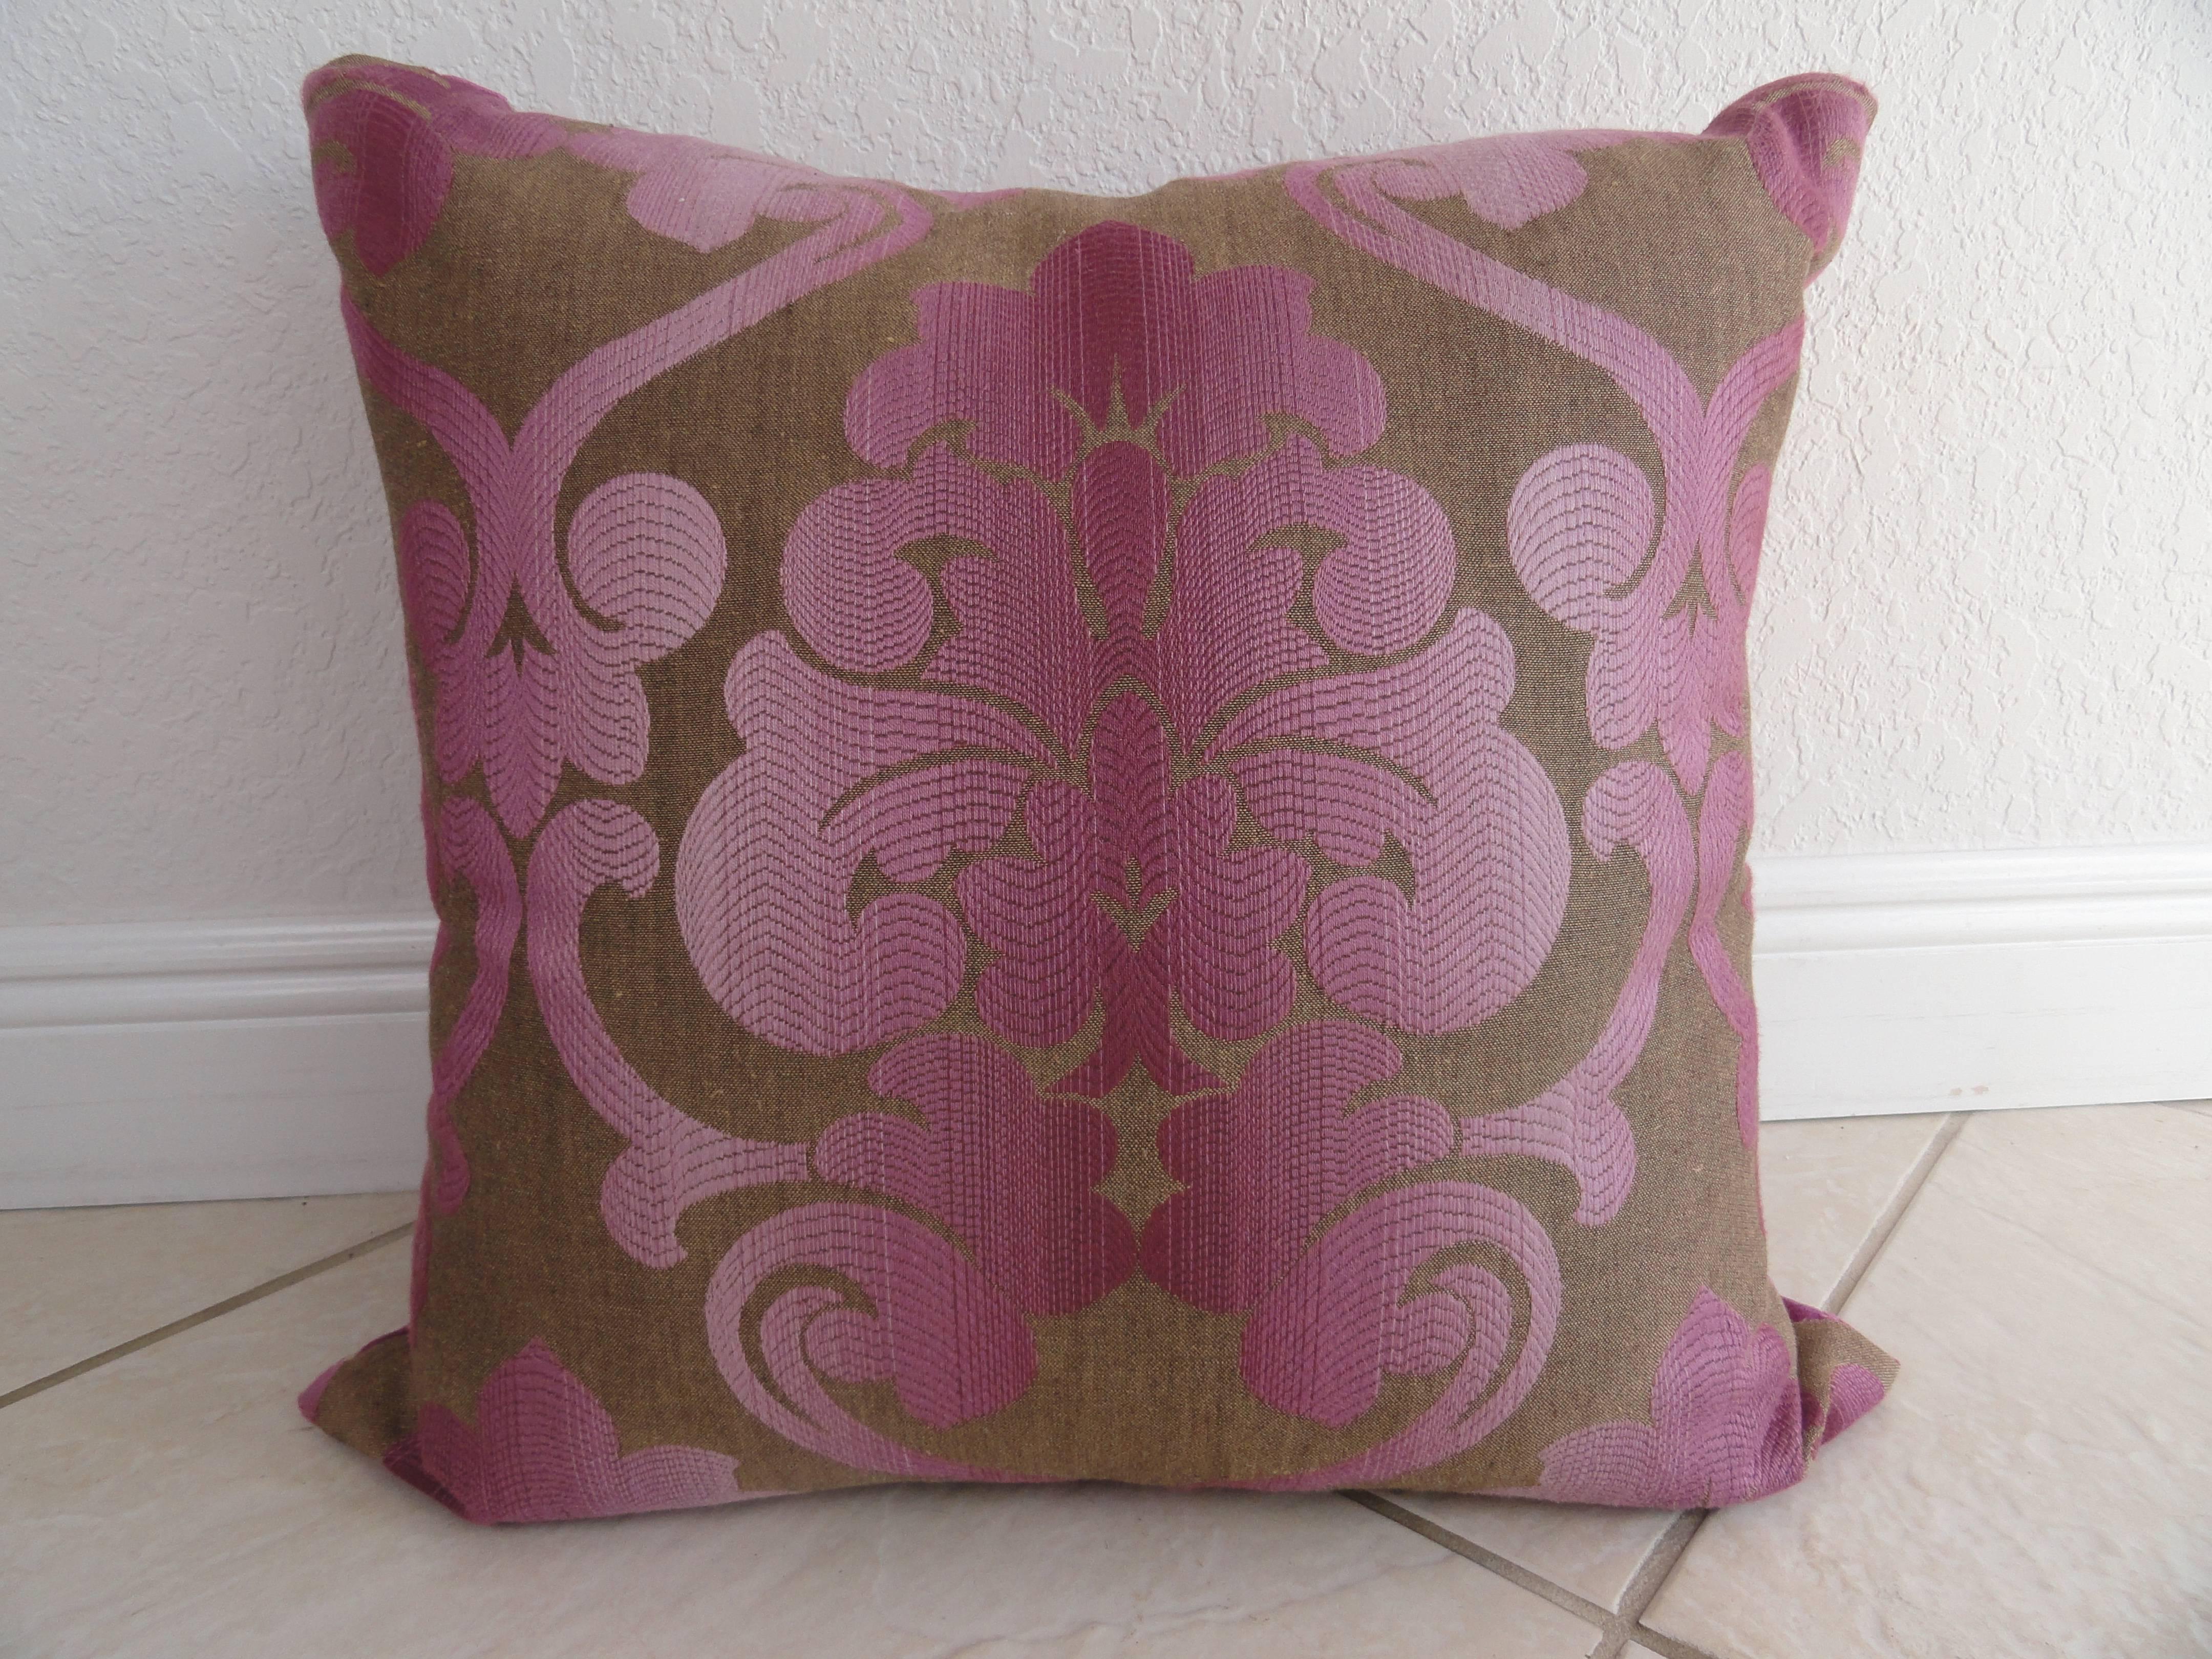 New pair of brocade custom pillows with velvet backs, 20 inch squares.